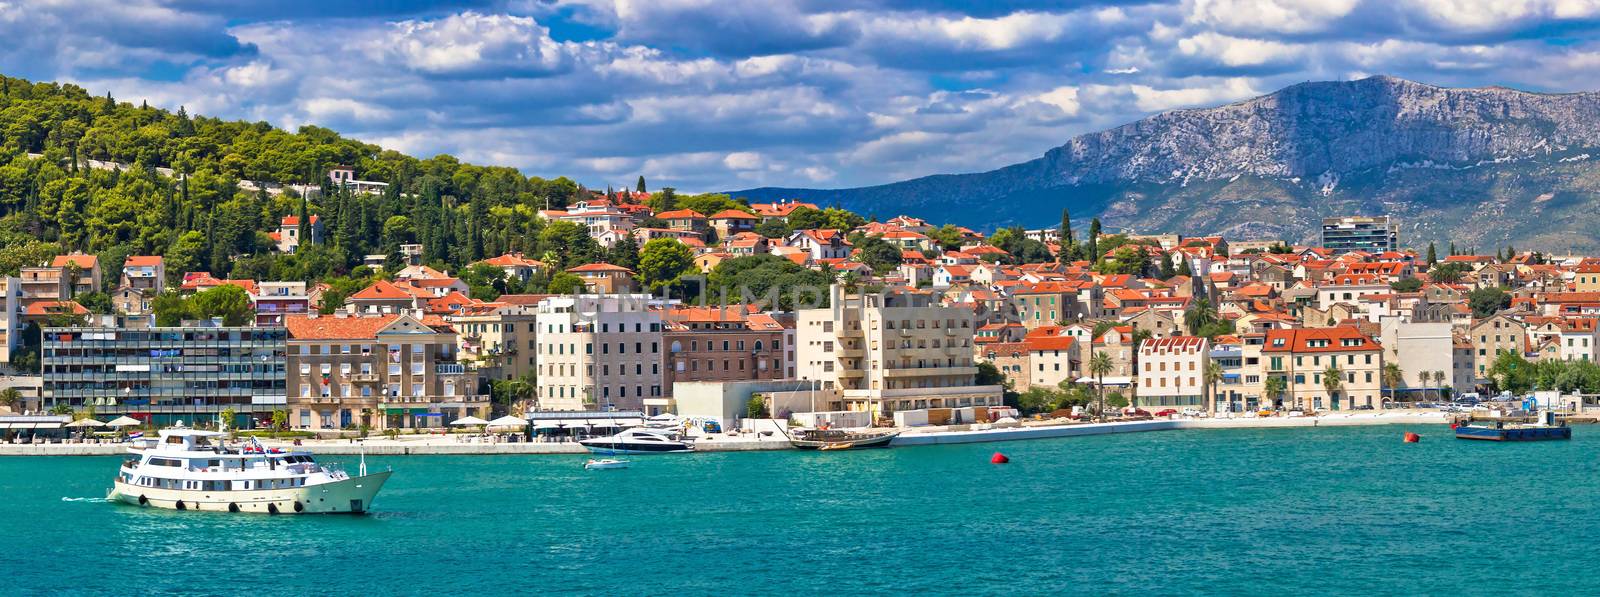 City of Split waterfront panorama, Dalmatia, Croatia